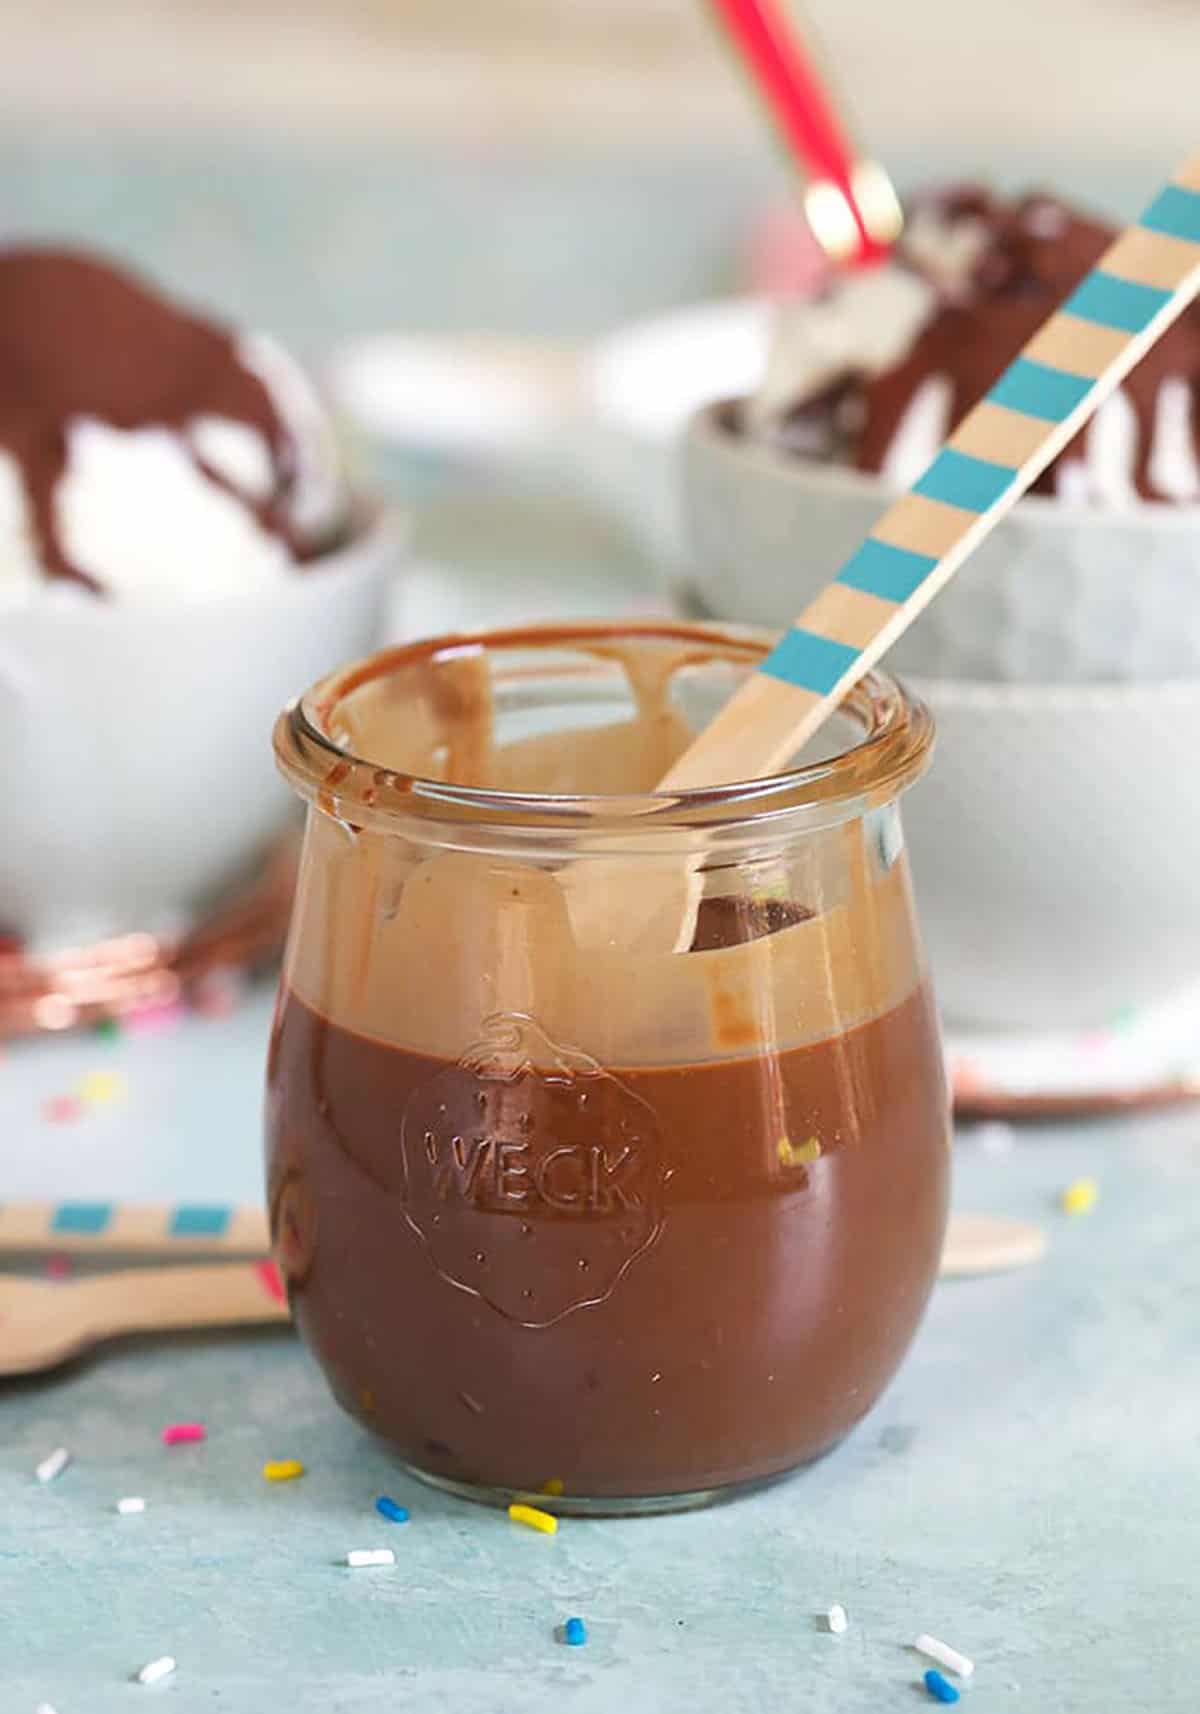 CHOCOLATE MAGIC SHELL IN A GLASS JAR.